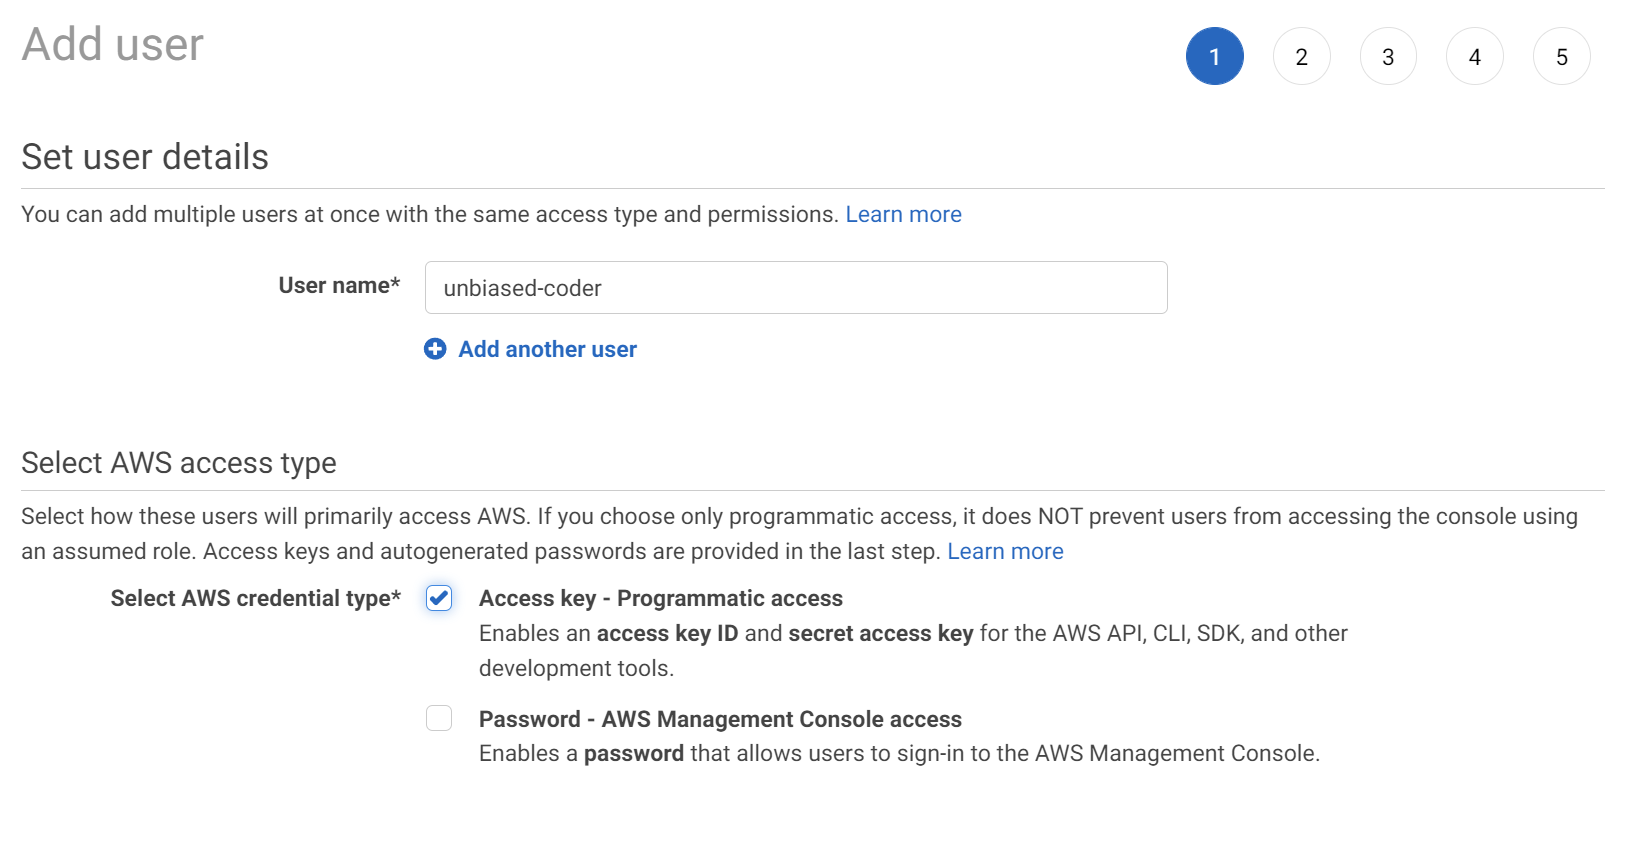 How to add an AWS DynamoDB user - Add user screen